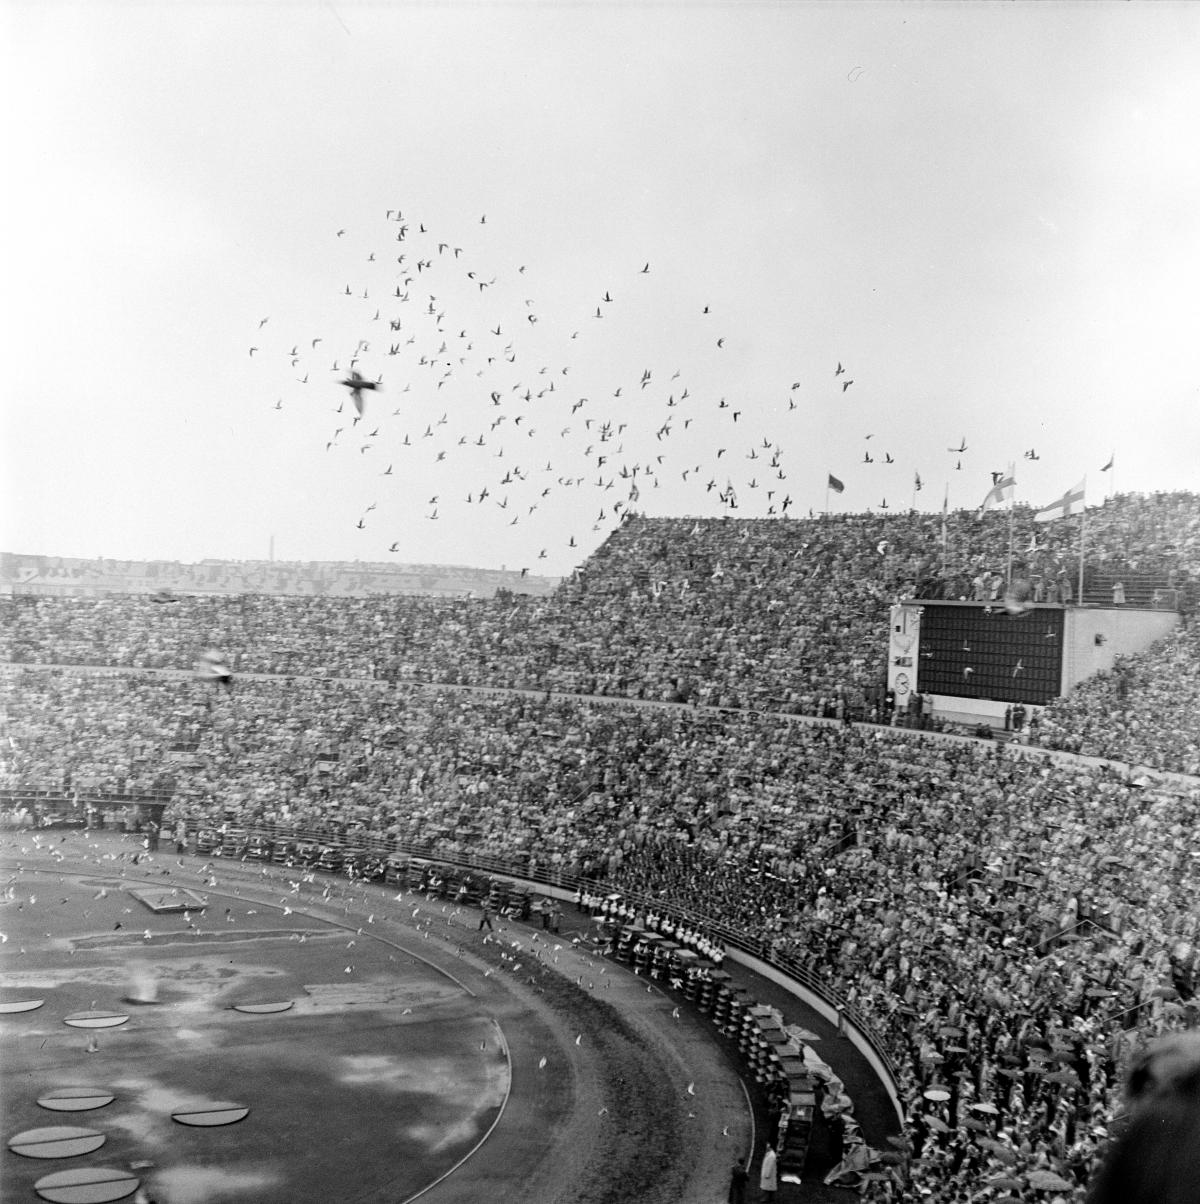 A large flock of doves taking flight at the Helsinki Olympic stadium